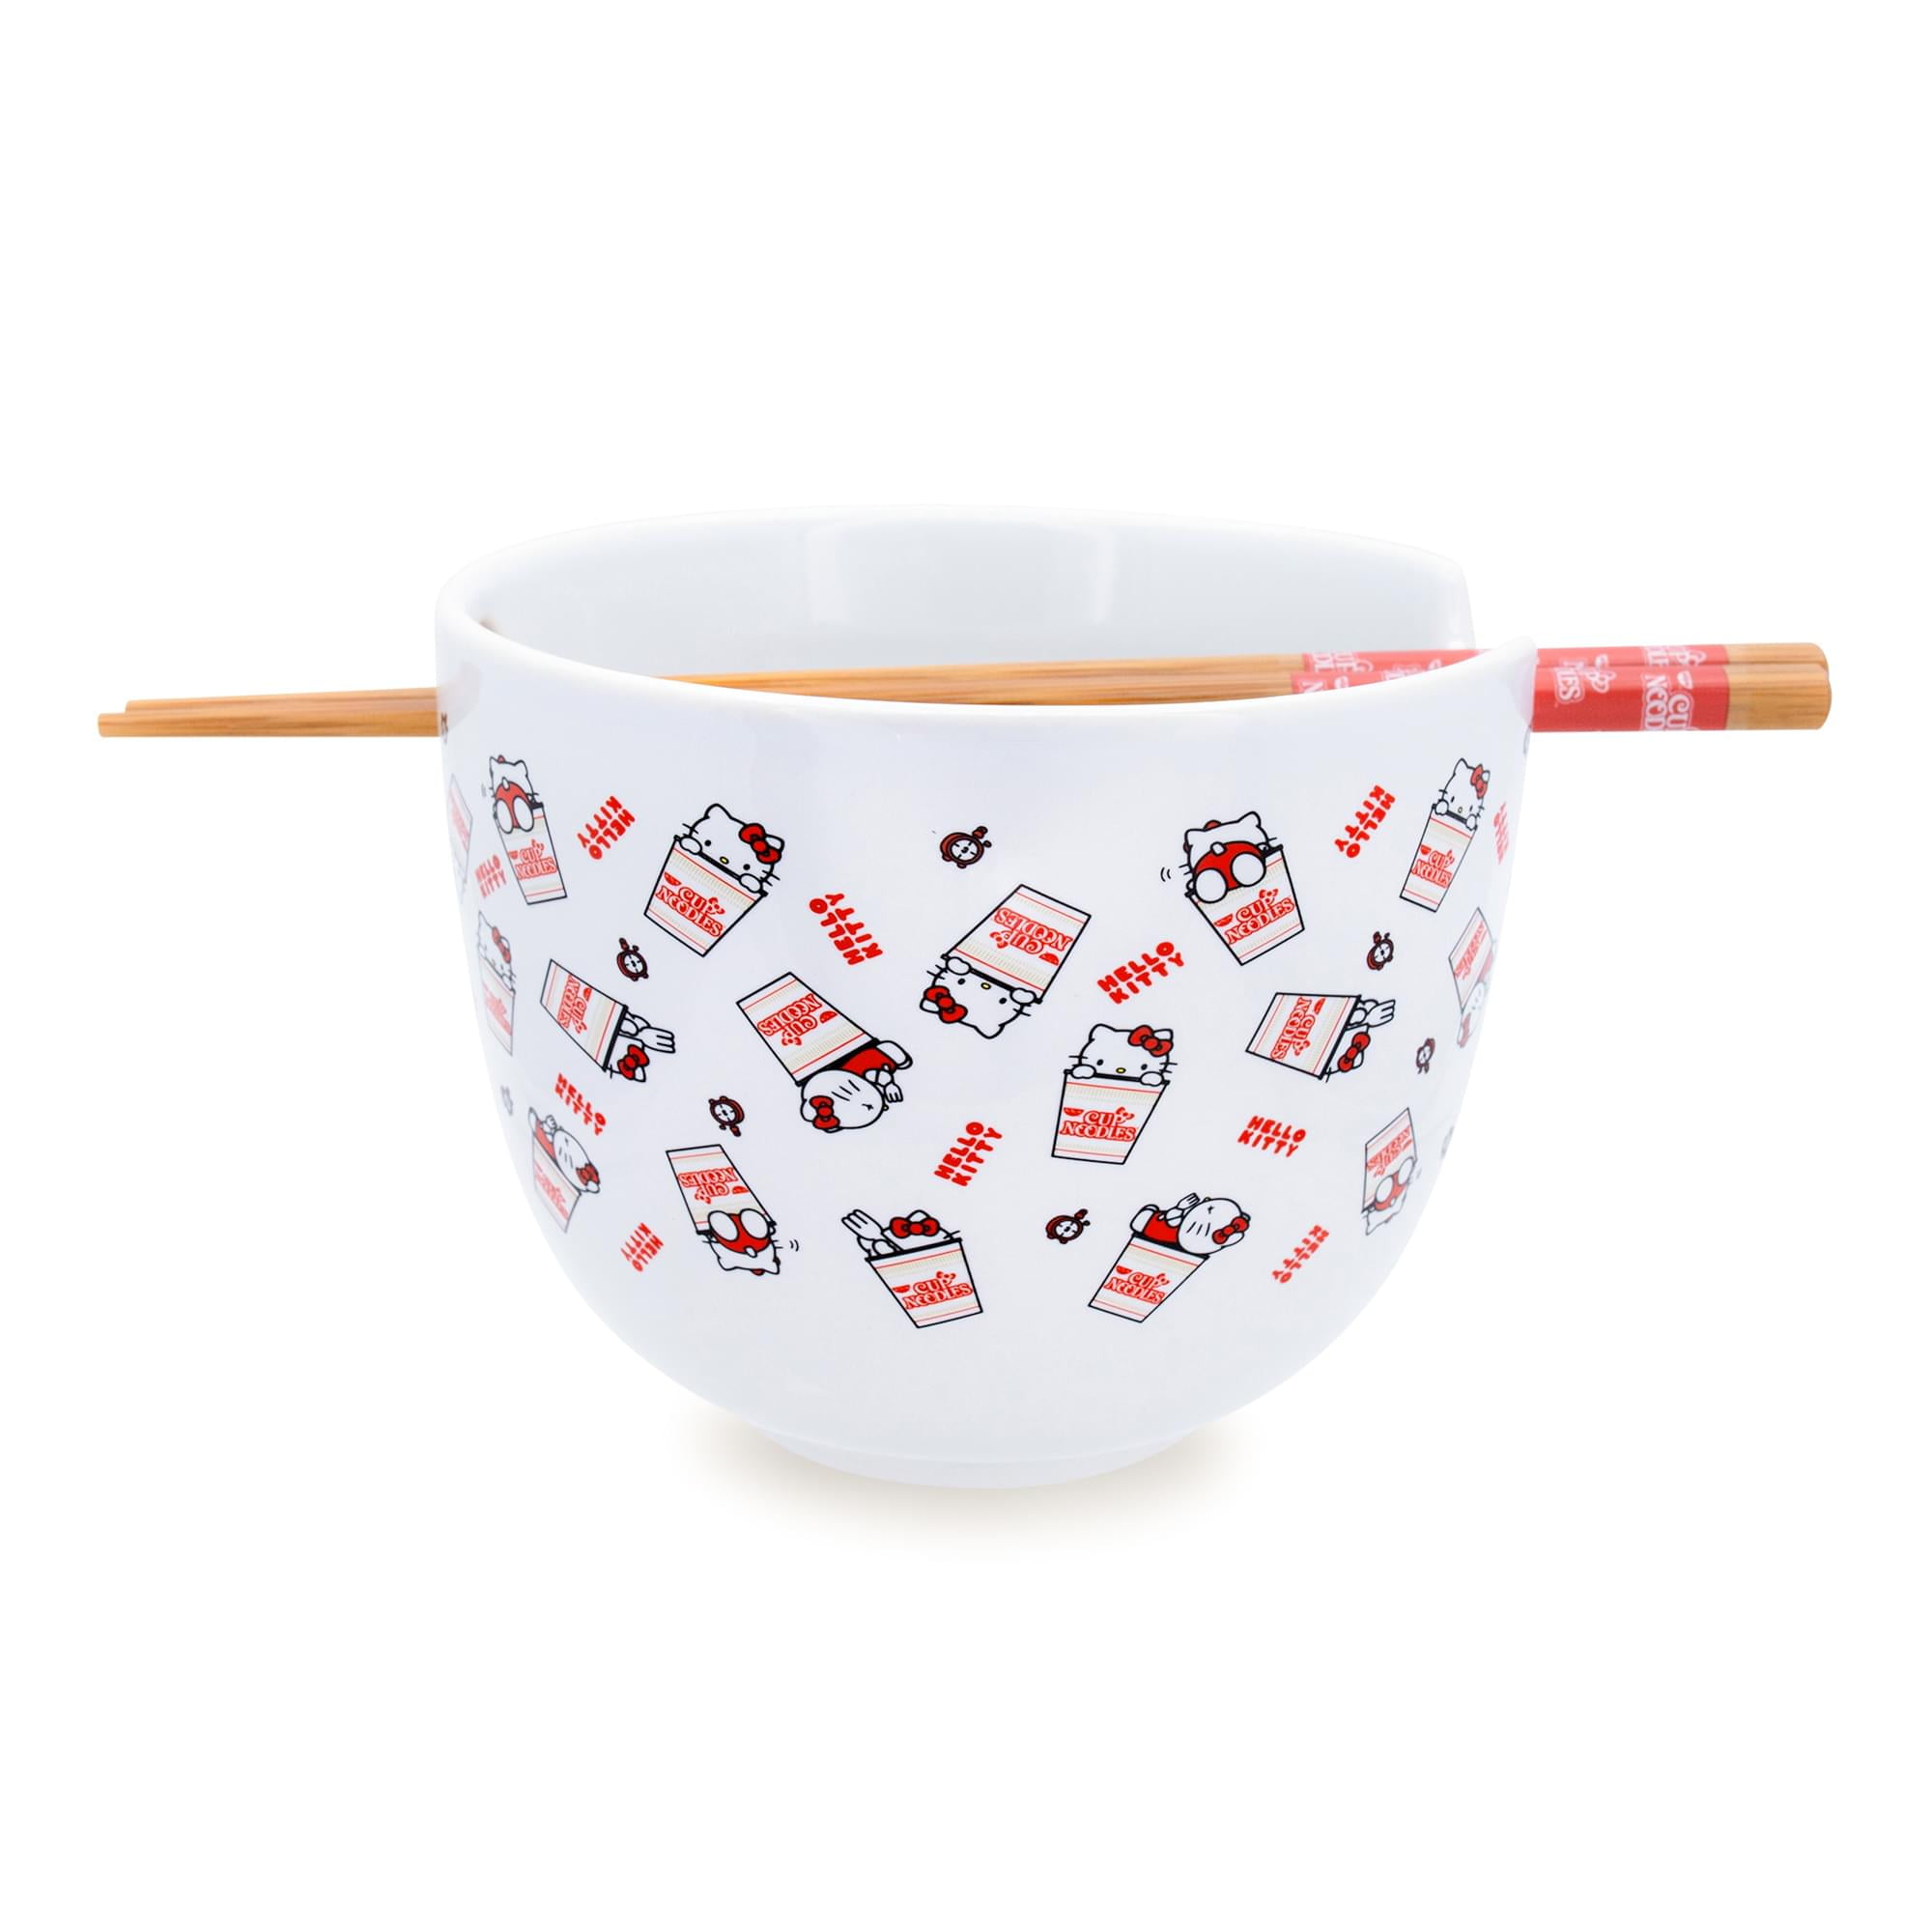 Sanrio Hello Kitty Stacked Snacks Ceramic Spoon Rest